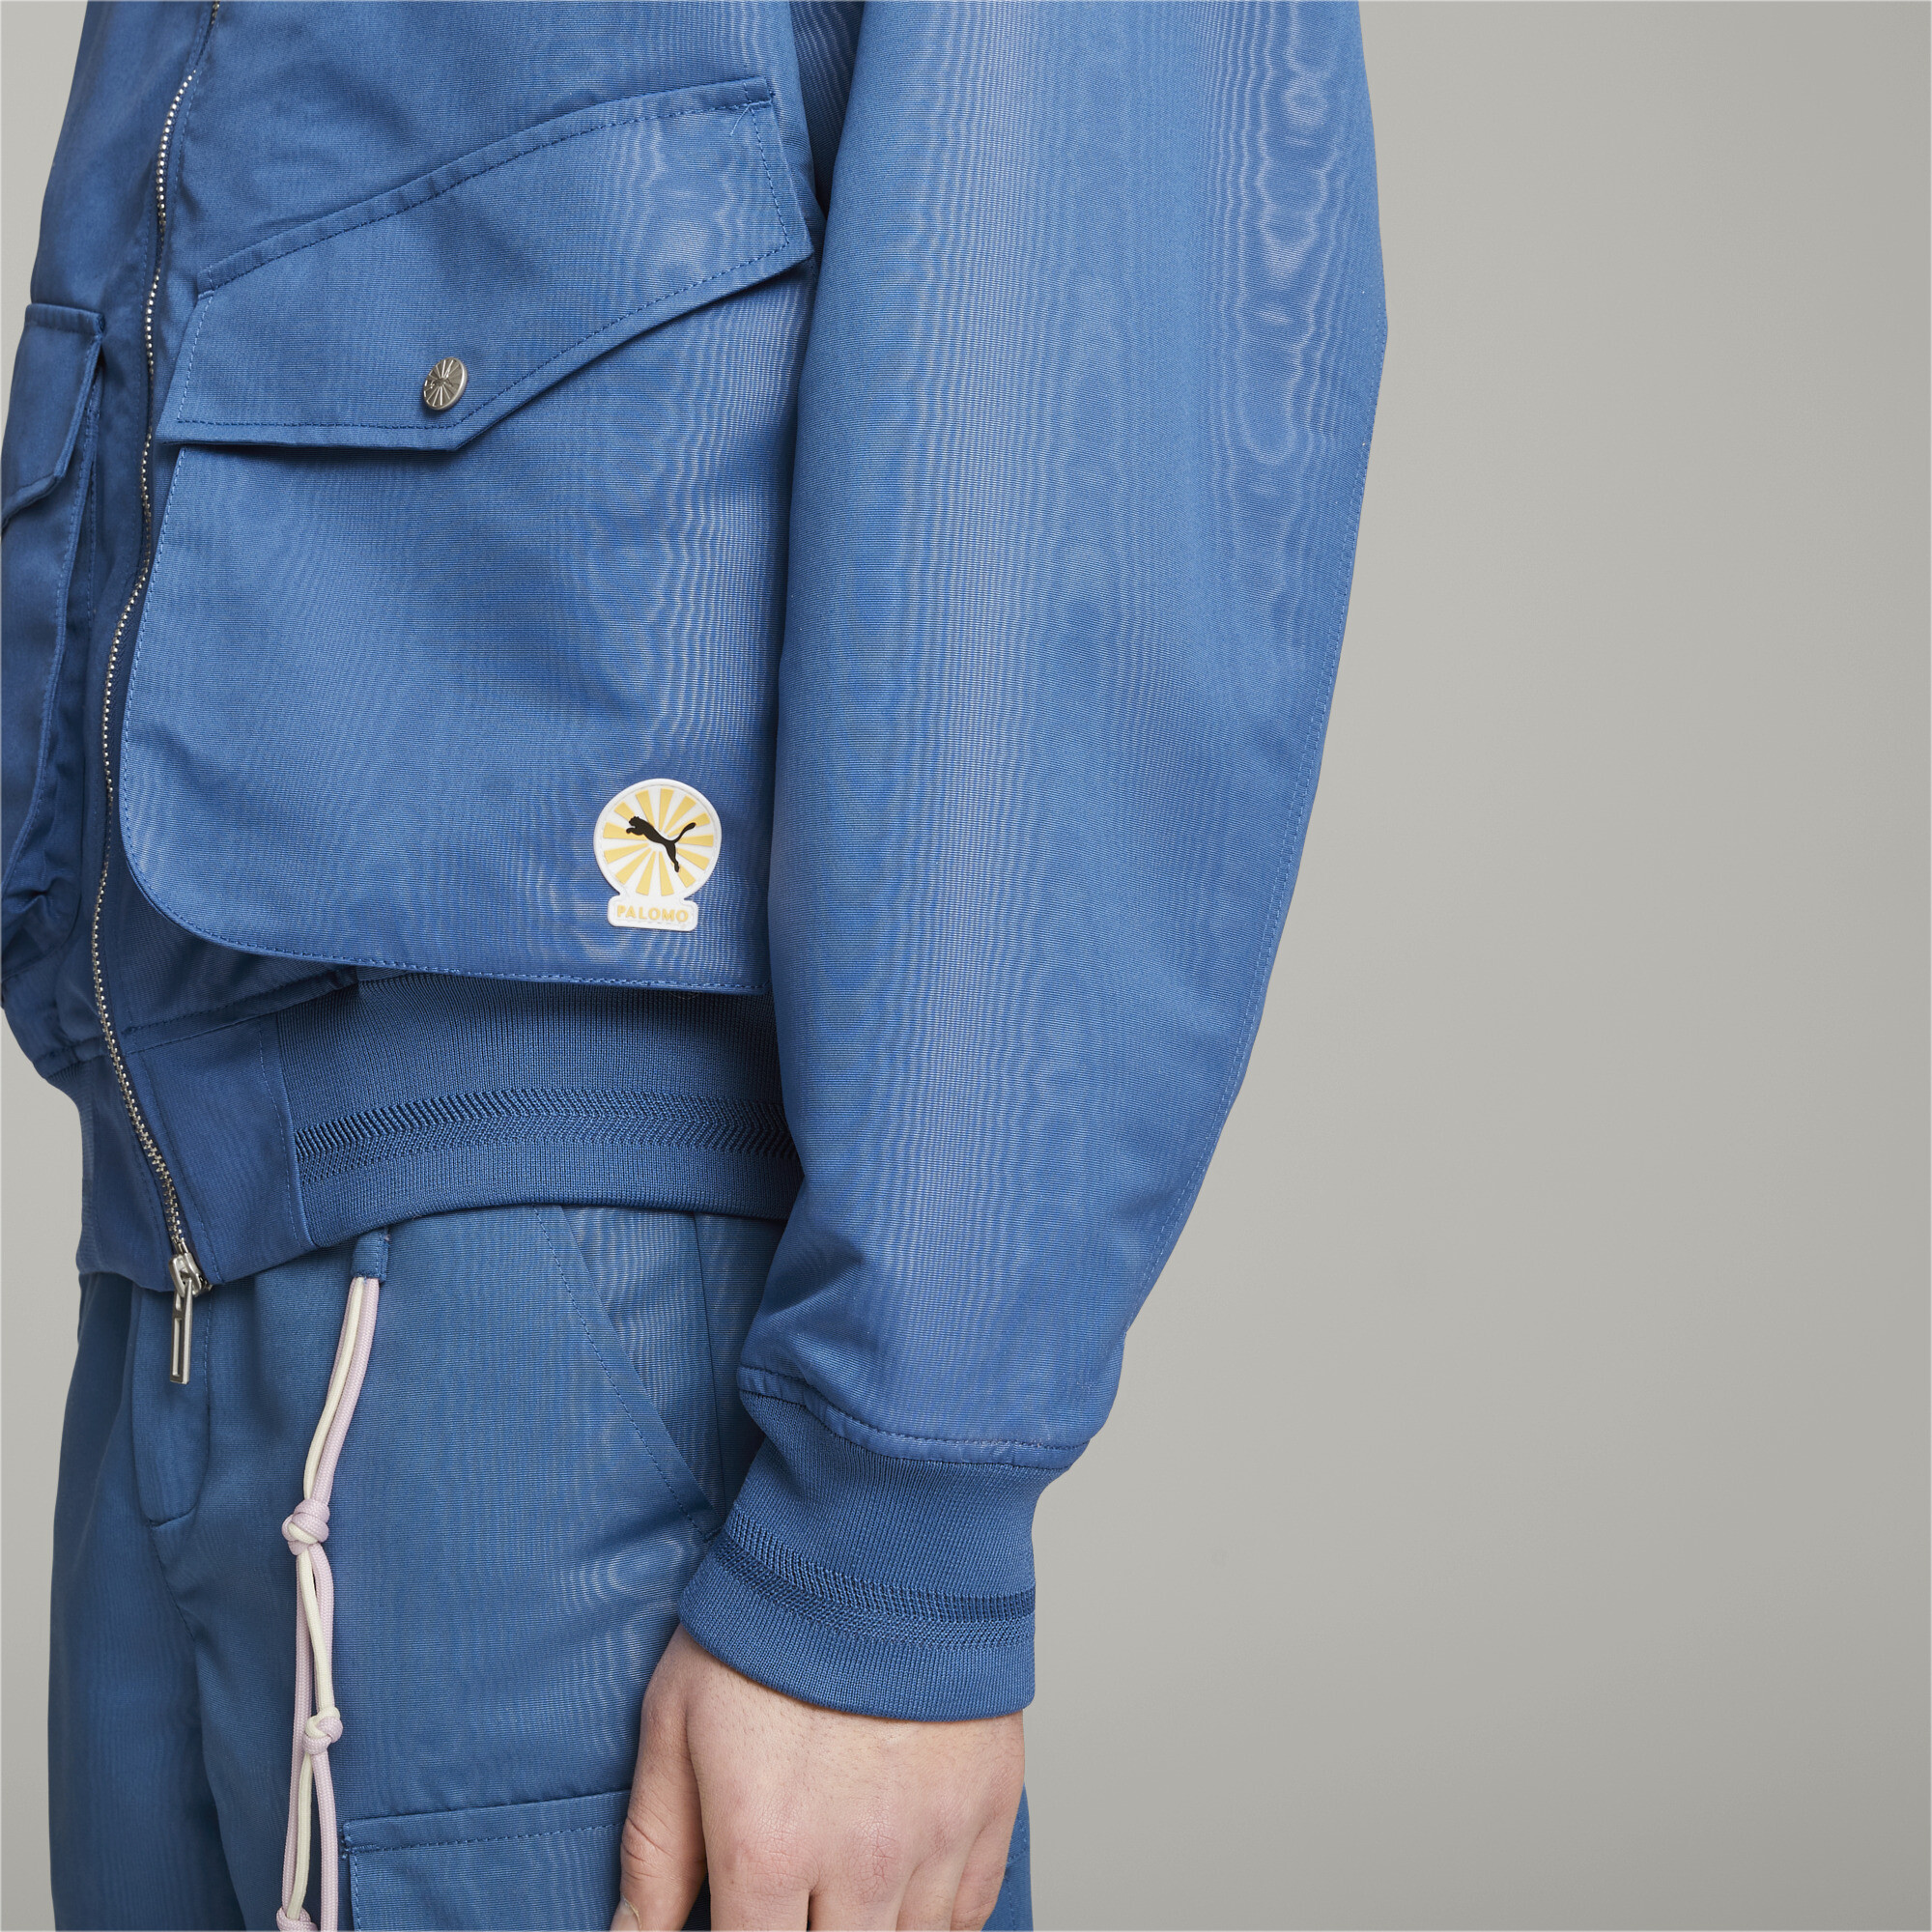 Men's PUMA X PALOMO Jacket In Blue, Size Medium